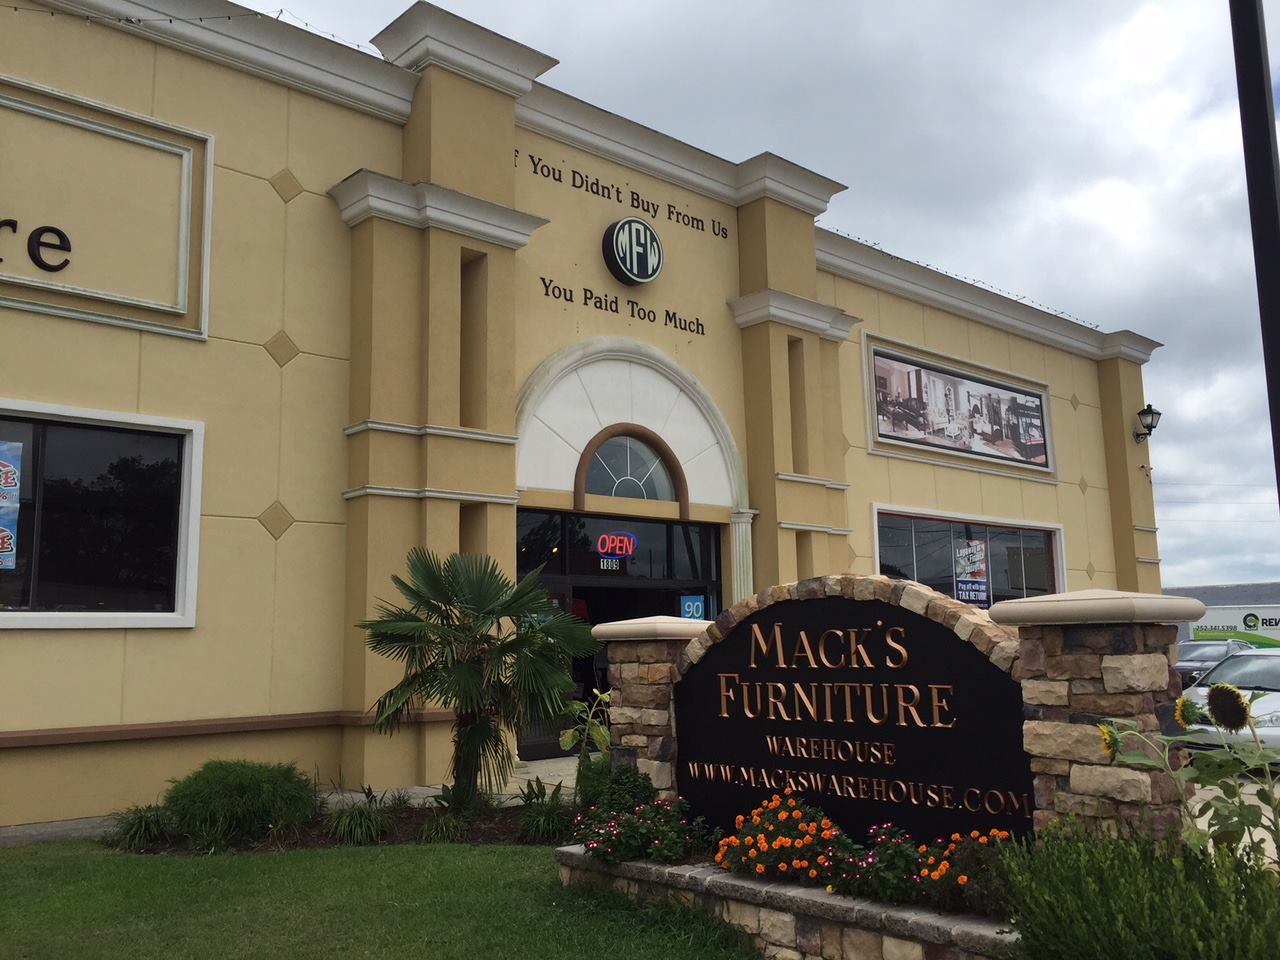 Mack's Furniture Warehouse